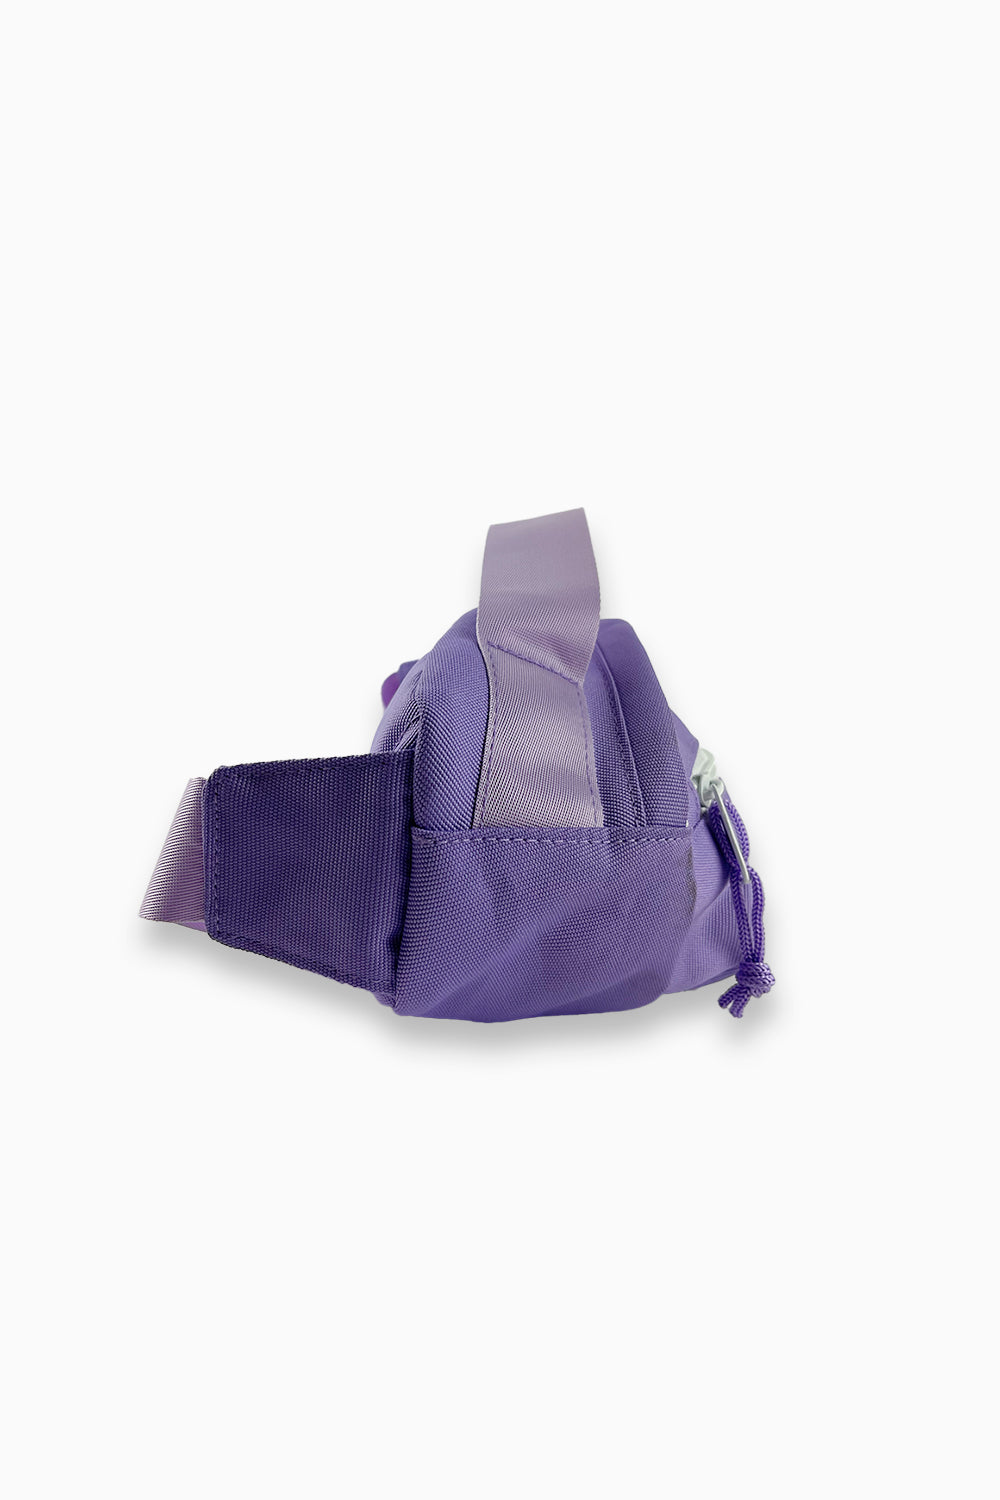 edc purple fanny pack side view